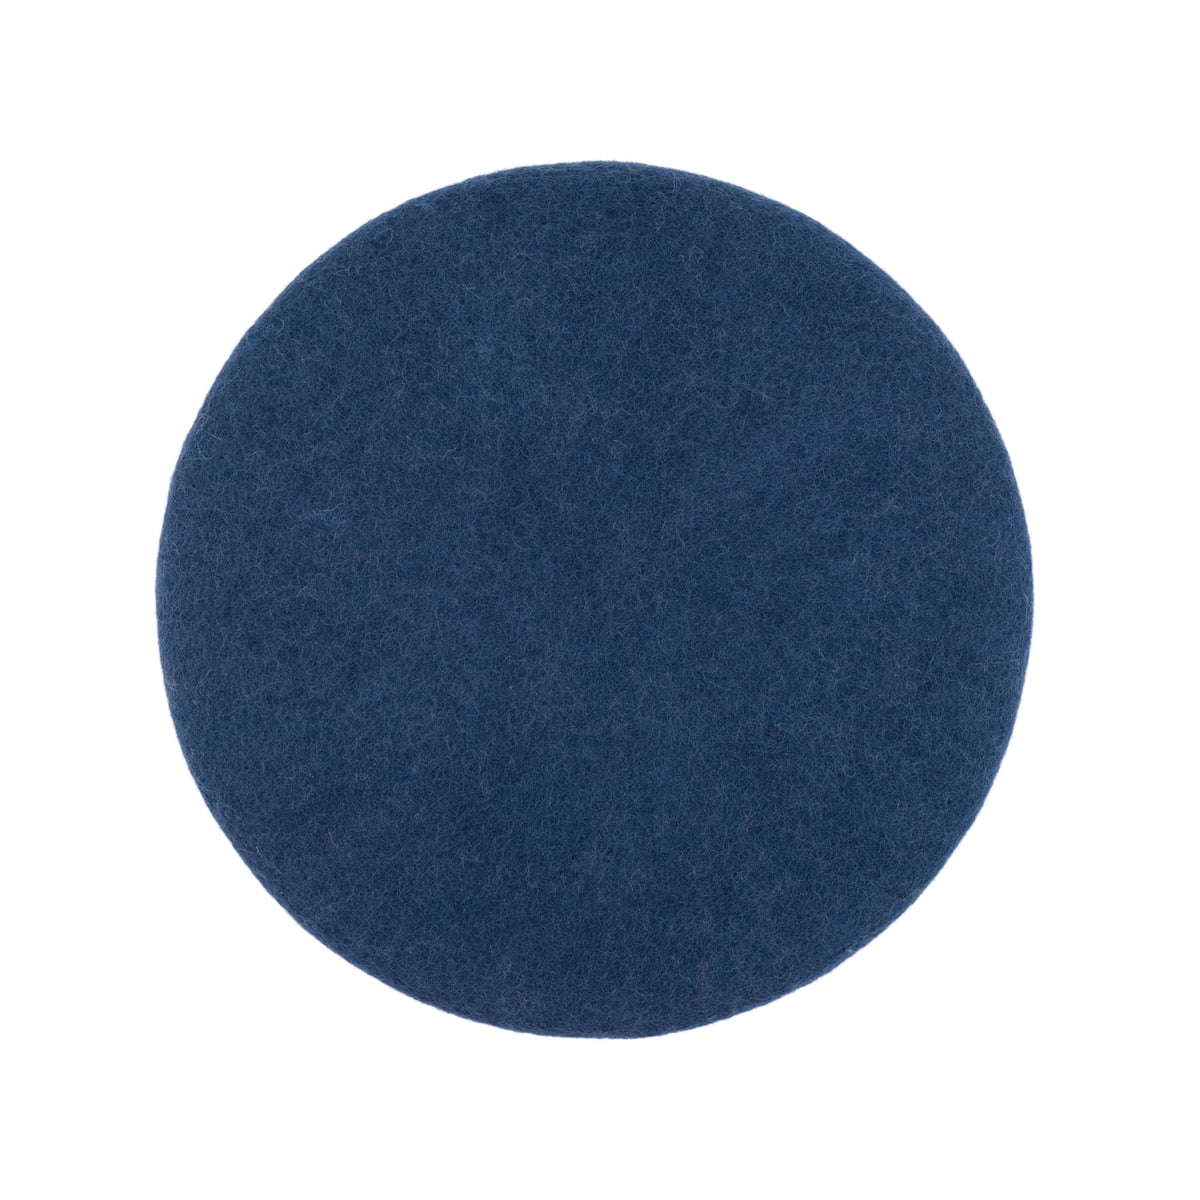 myfelt - Housse de siège alva plate ø 36 cm, bleu foncé